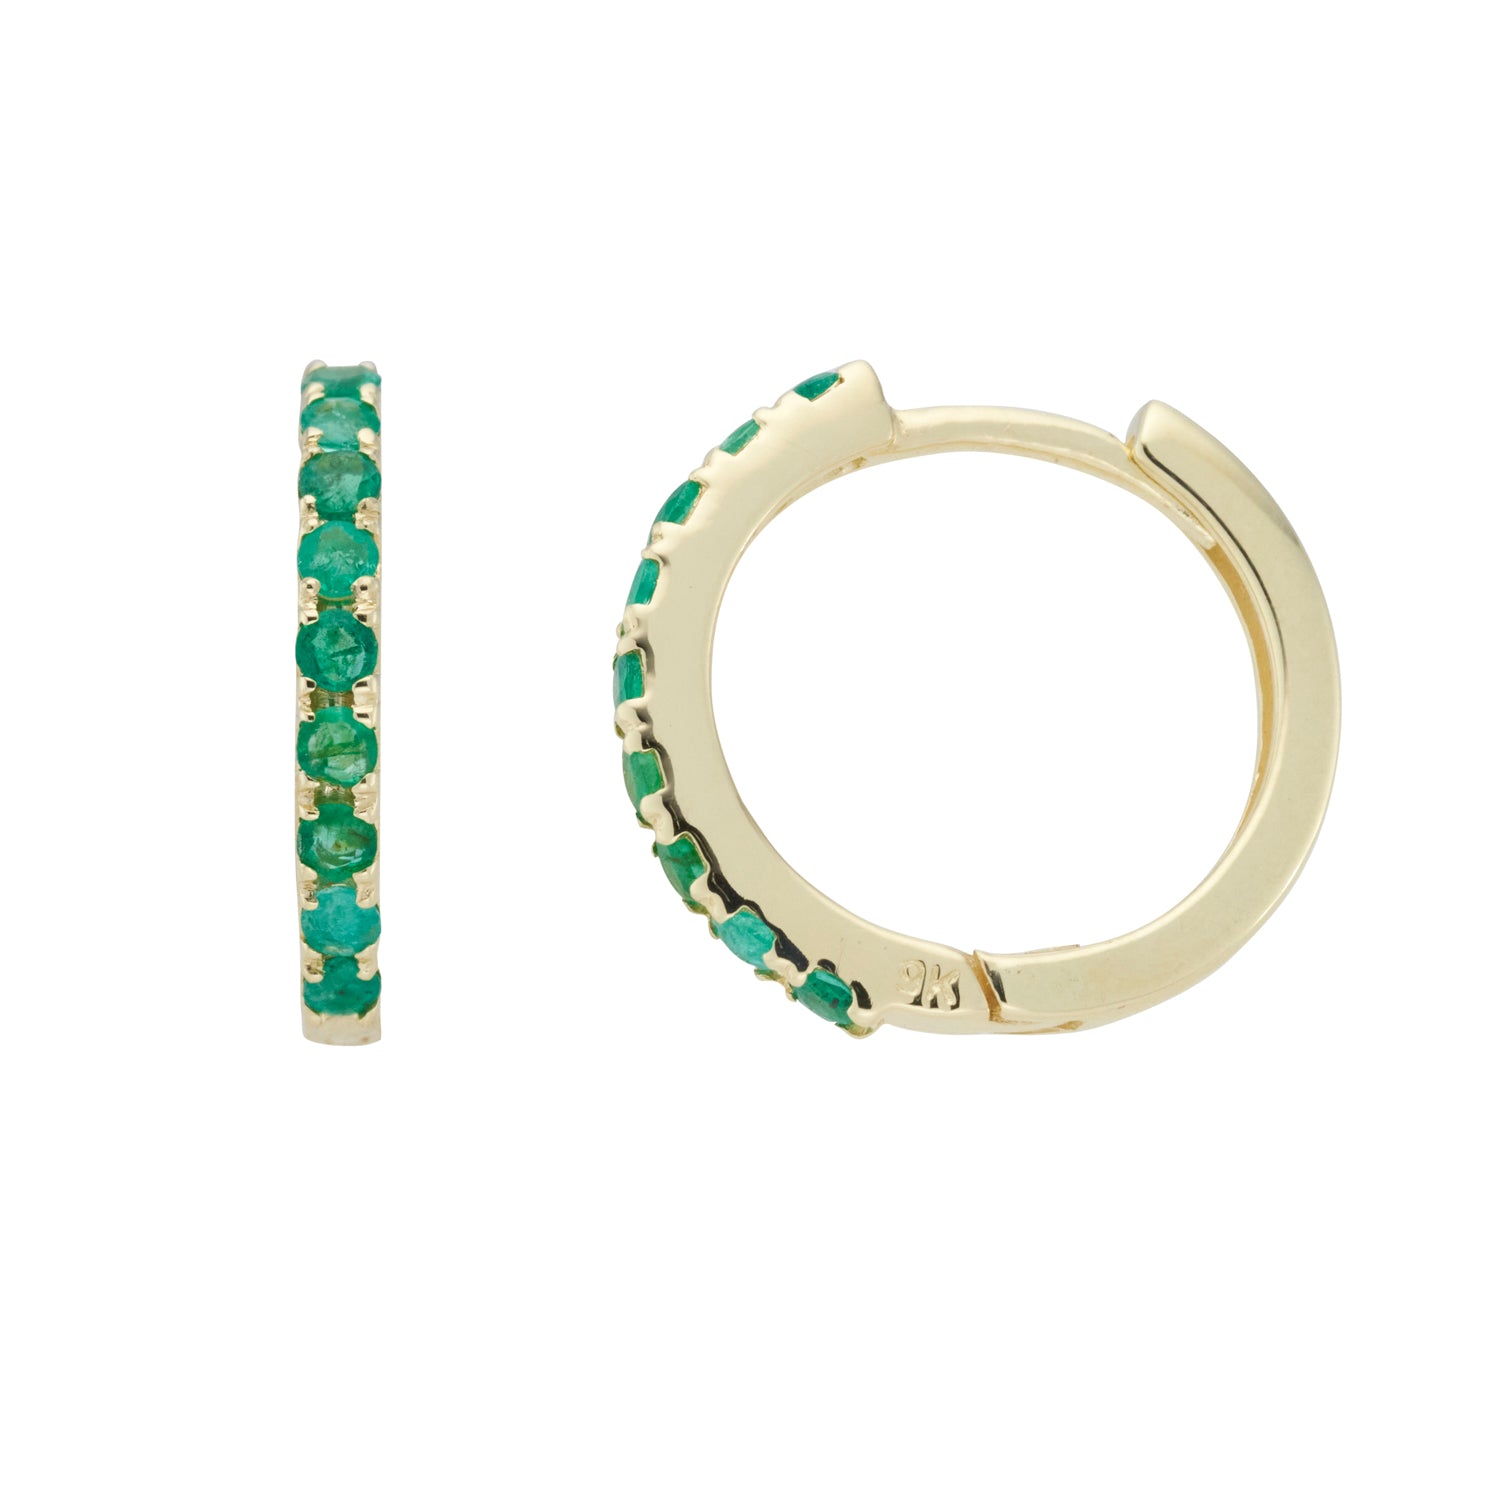 9ct gold emerald huggy earrings